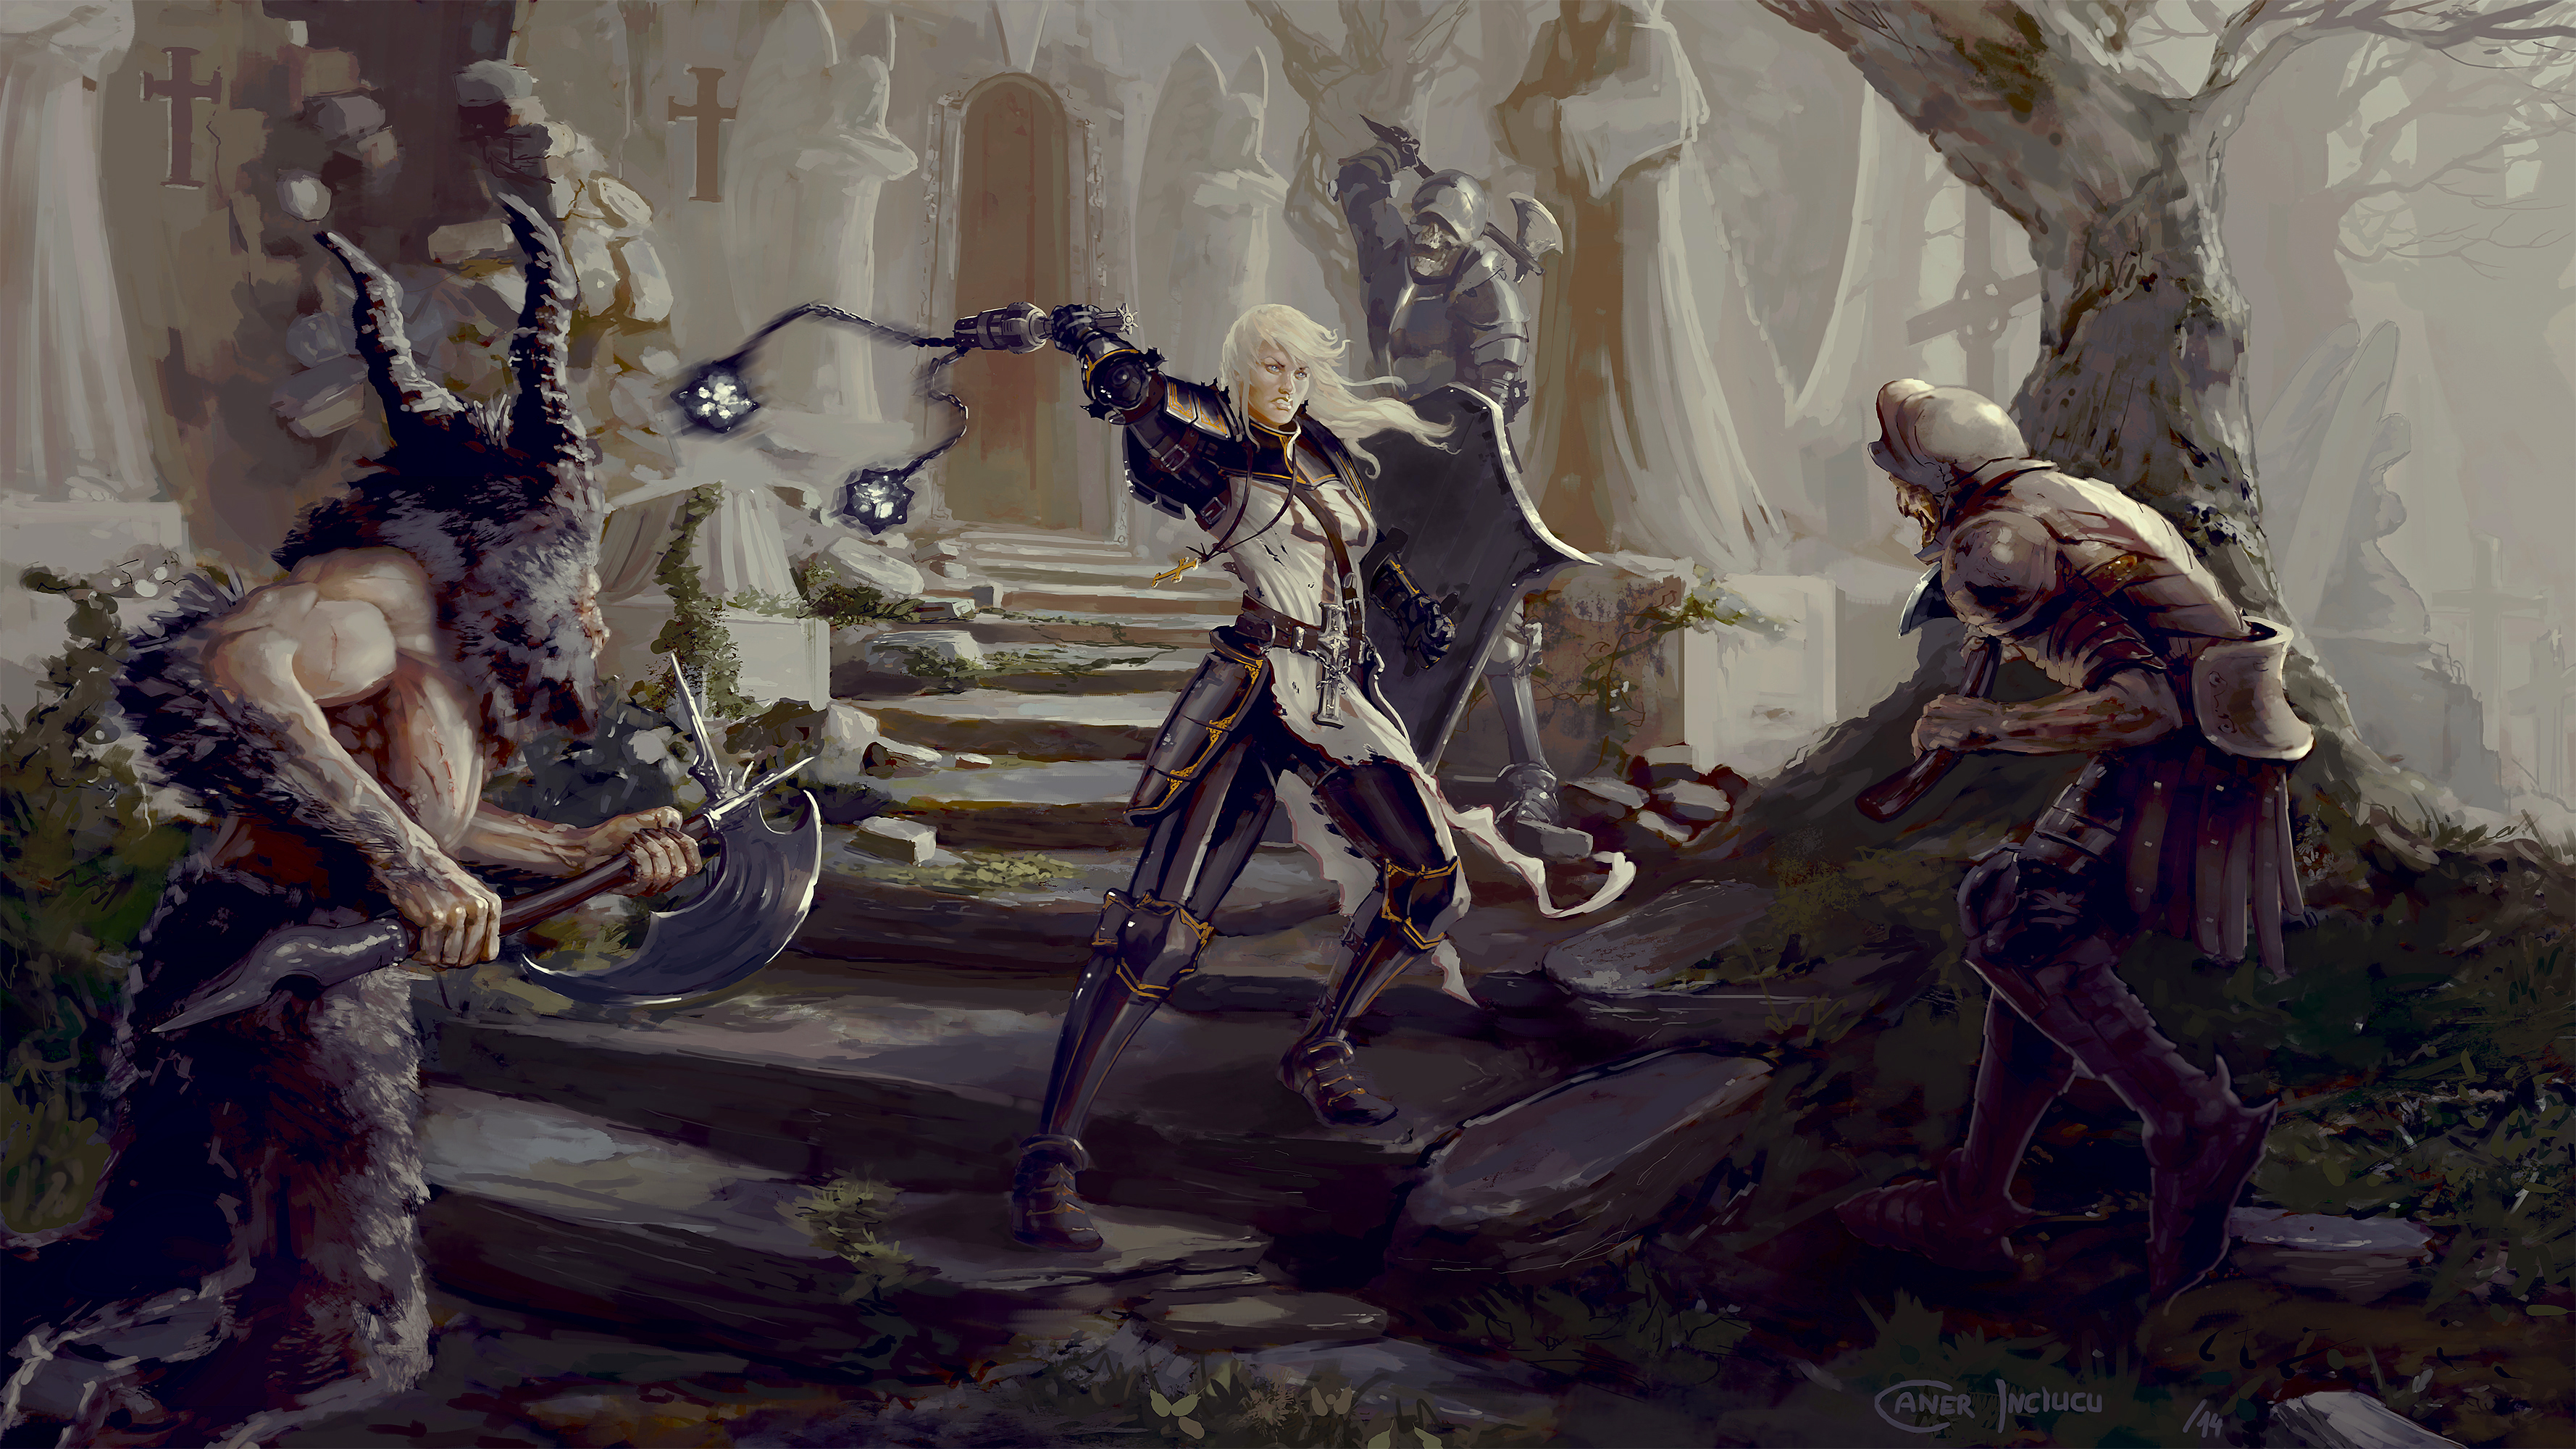 Diablo III: Reaper Of Souls HD Wallpaper by Caner Inciucu